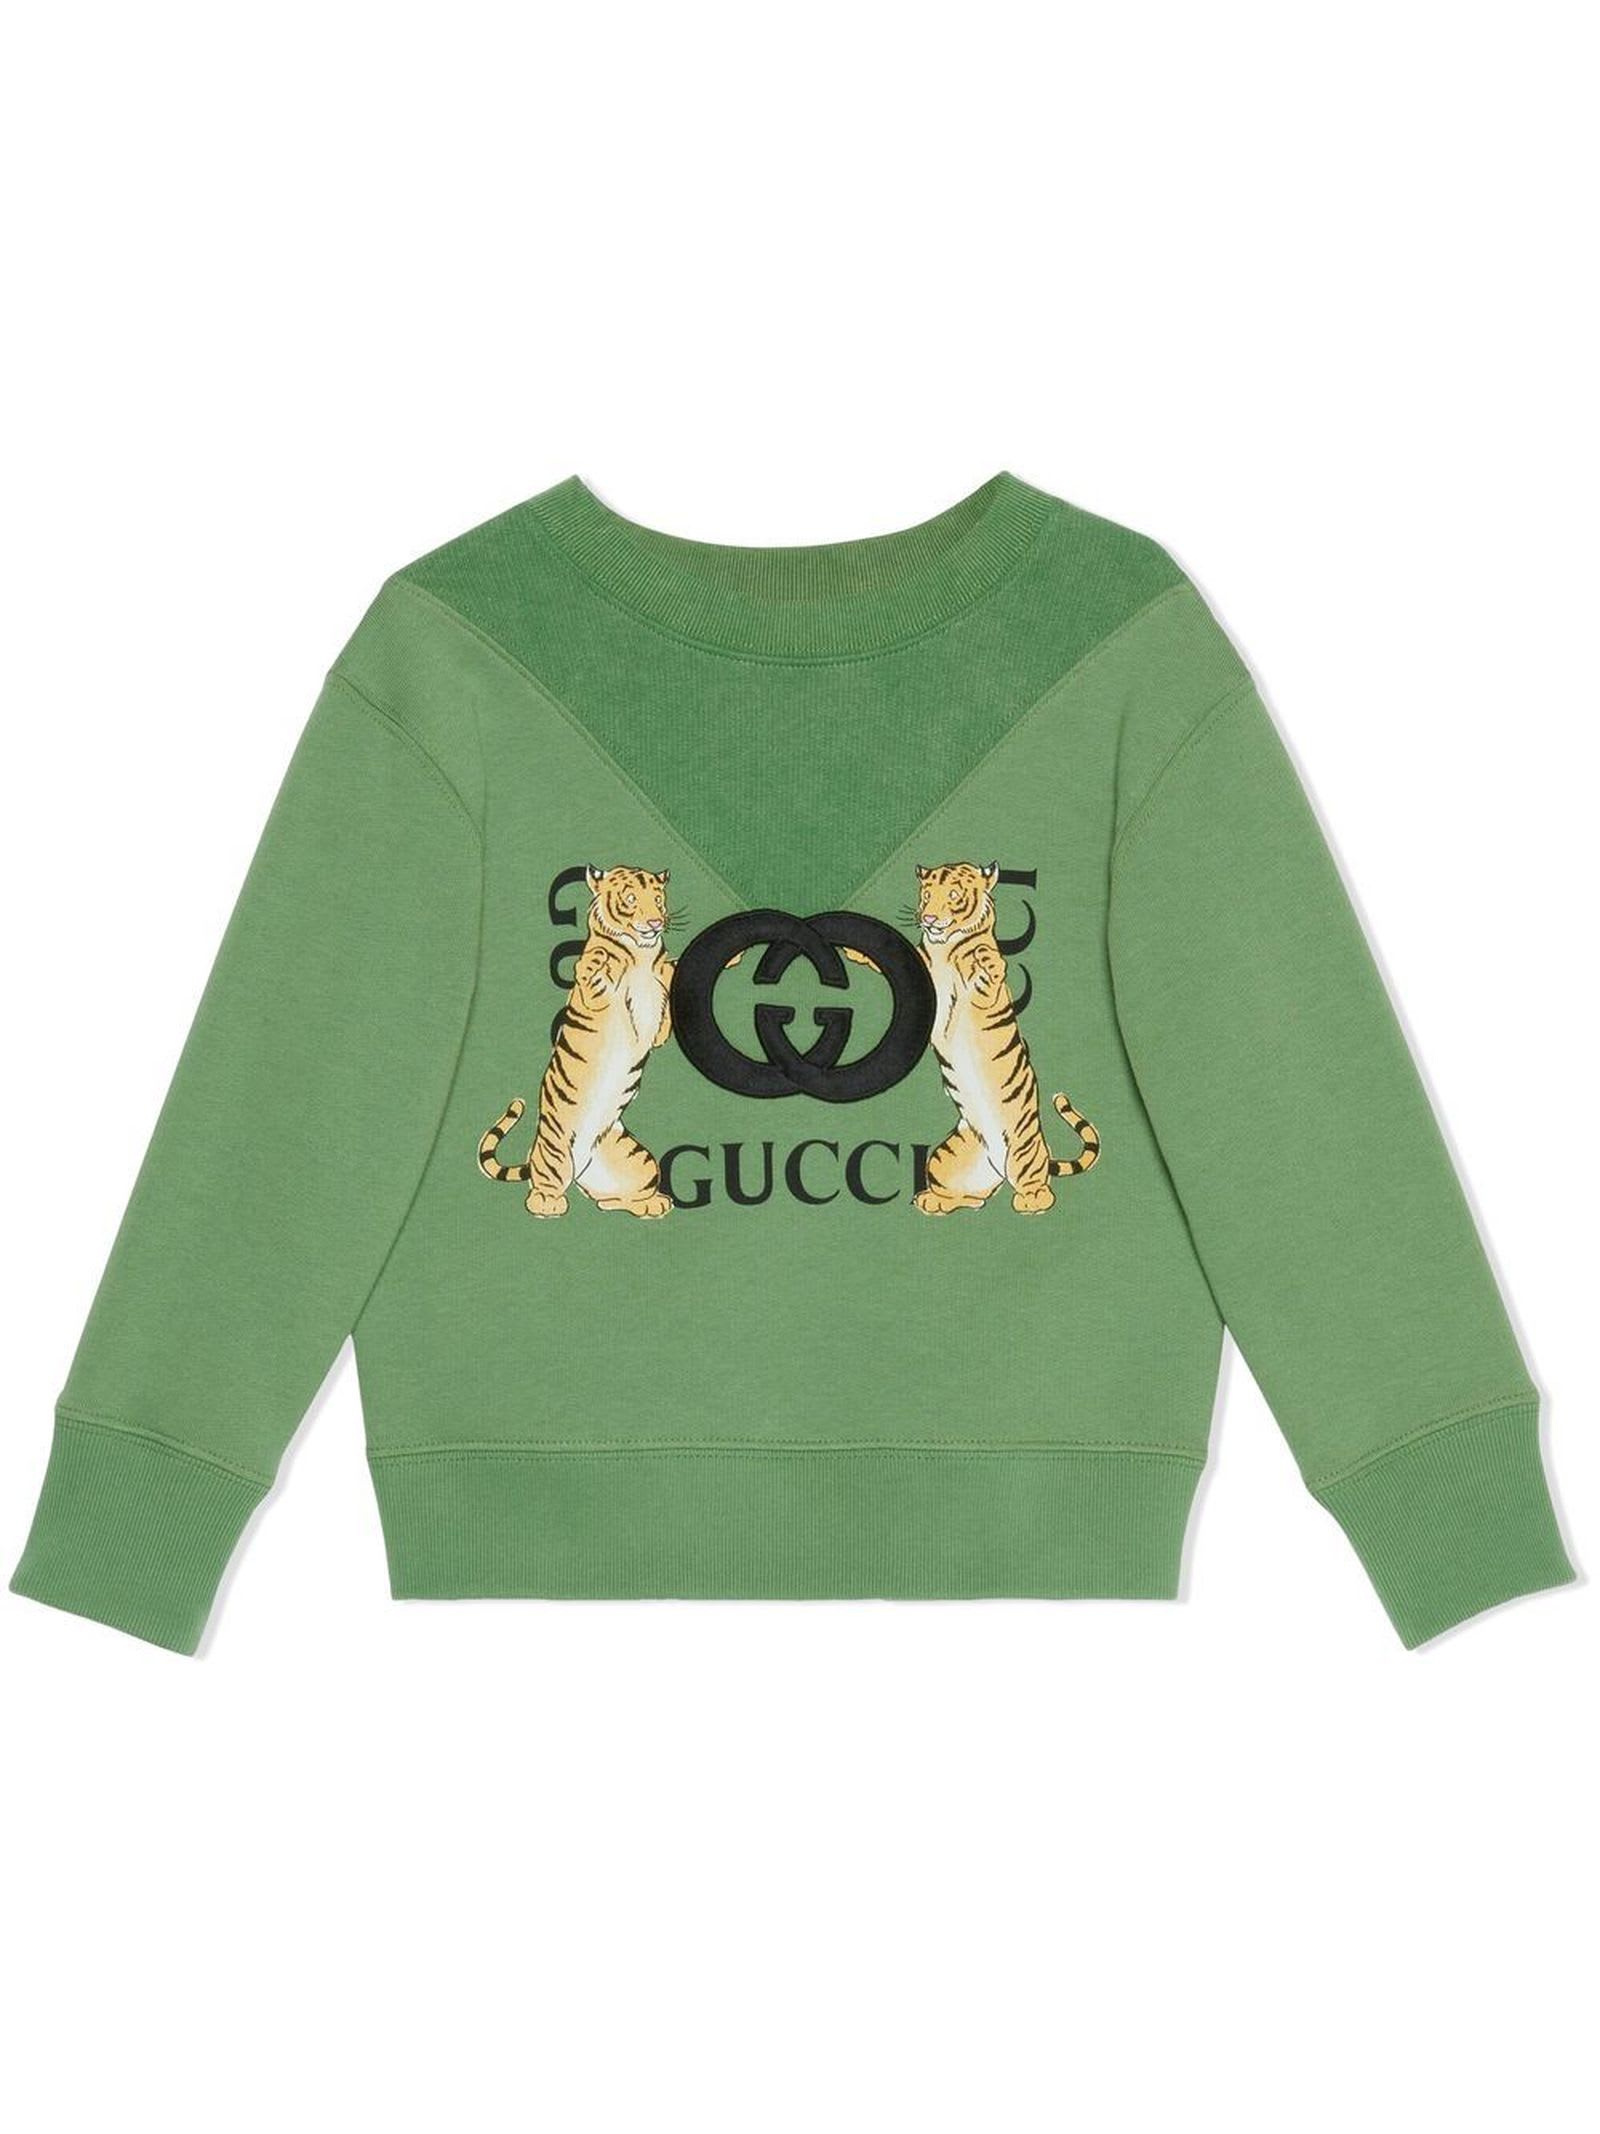 Gucci Green Cotton Sweatshirt